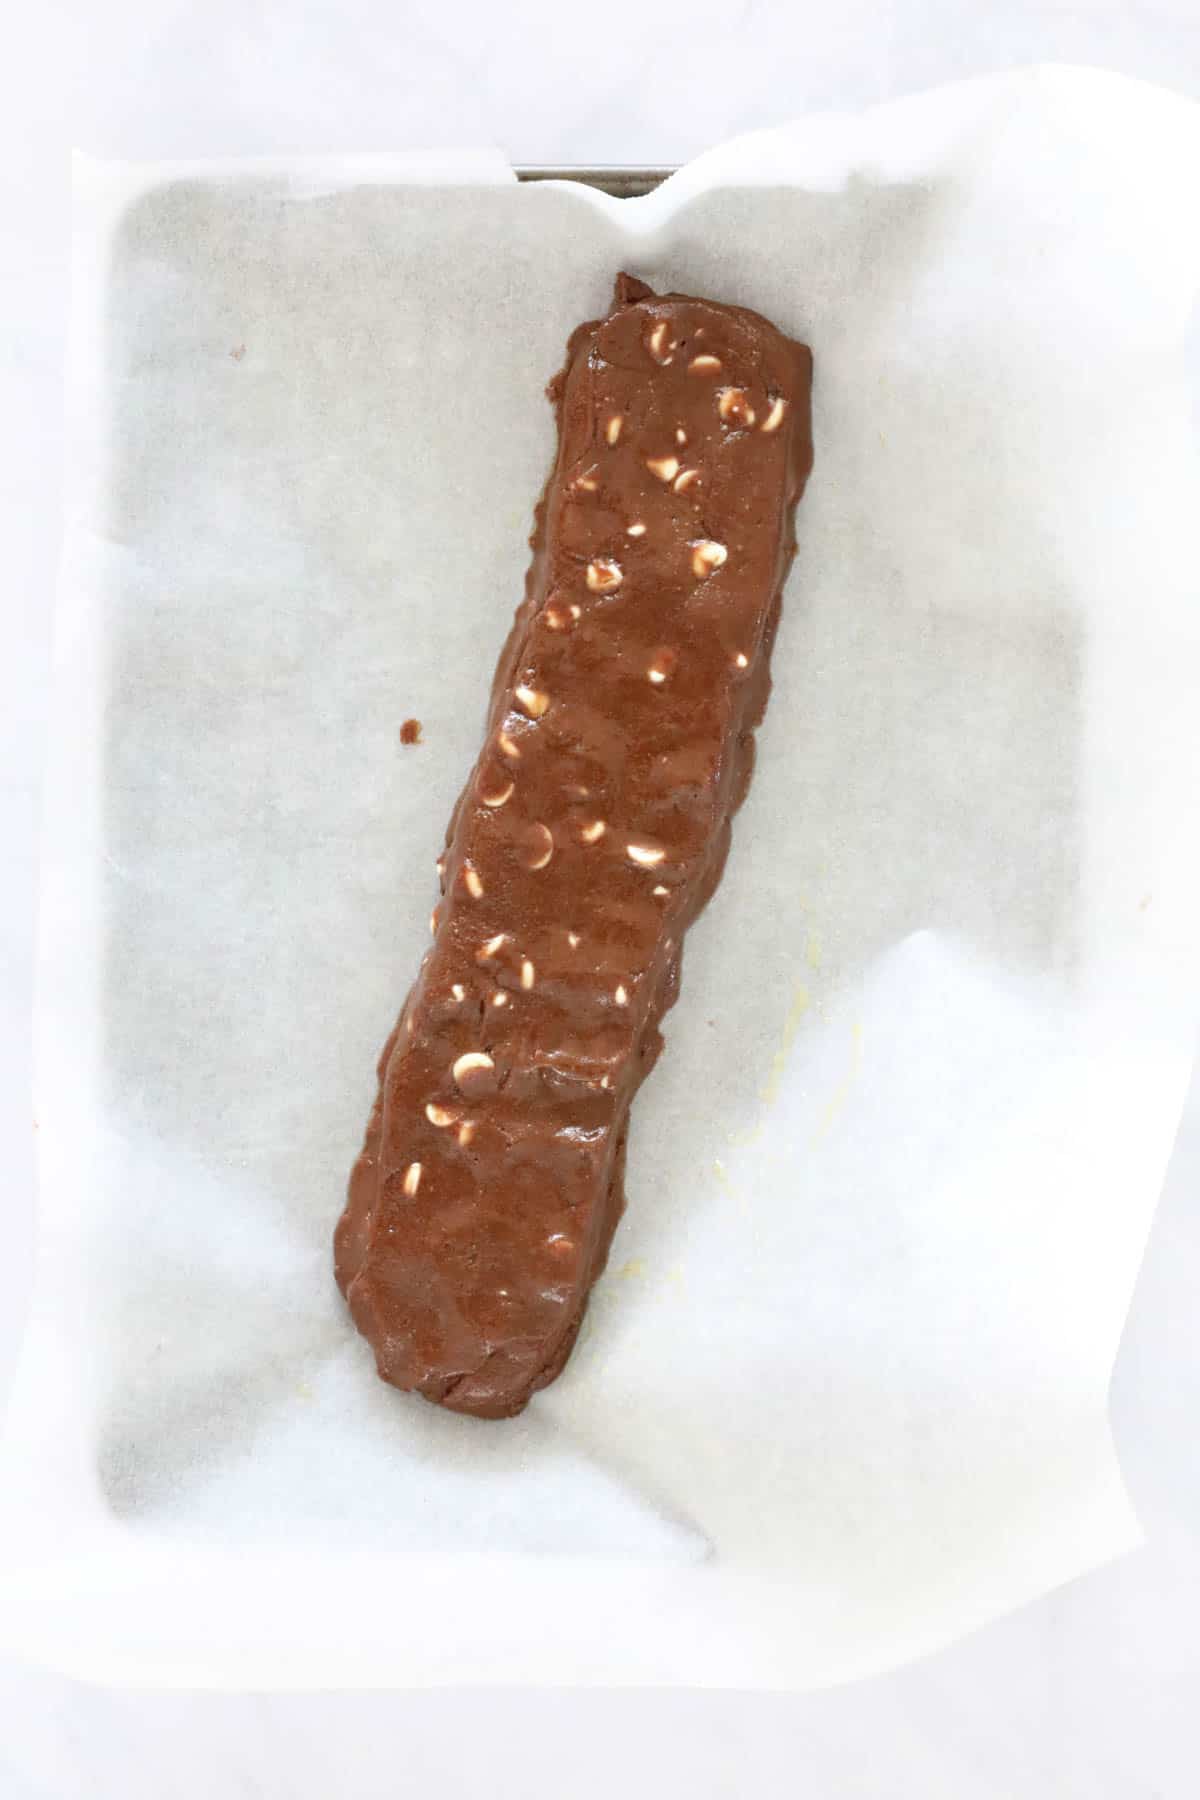 A log of chocolate chip biscotti.